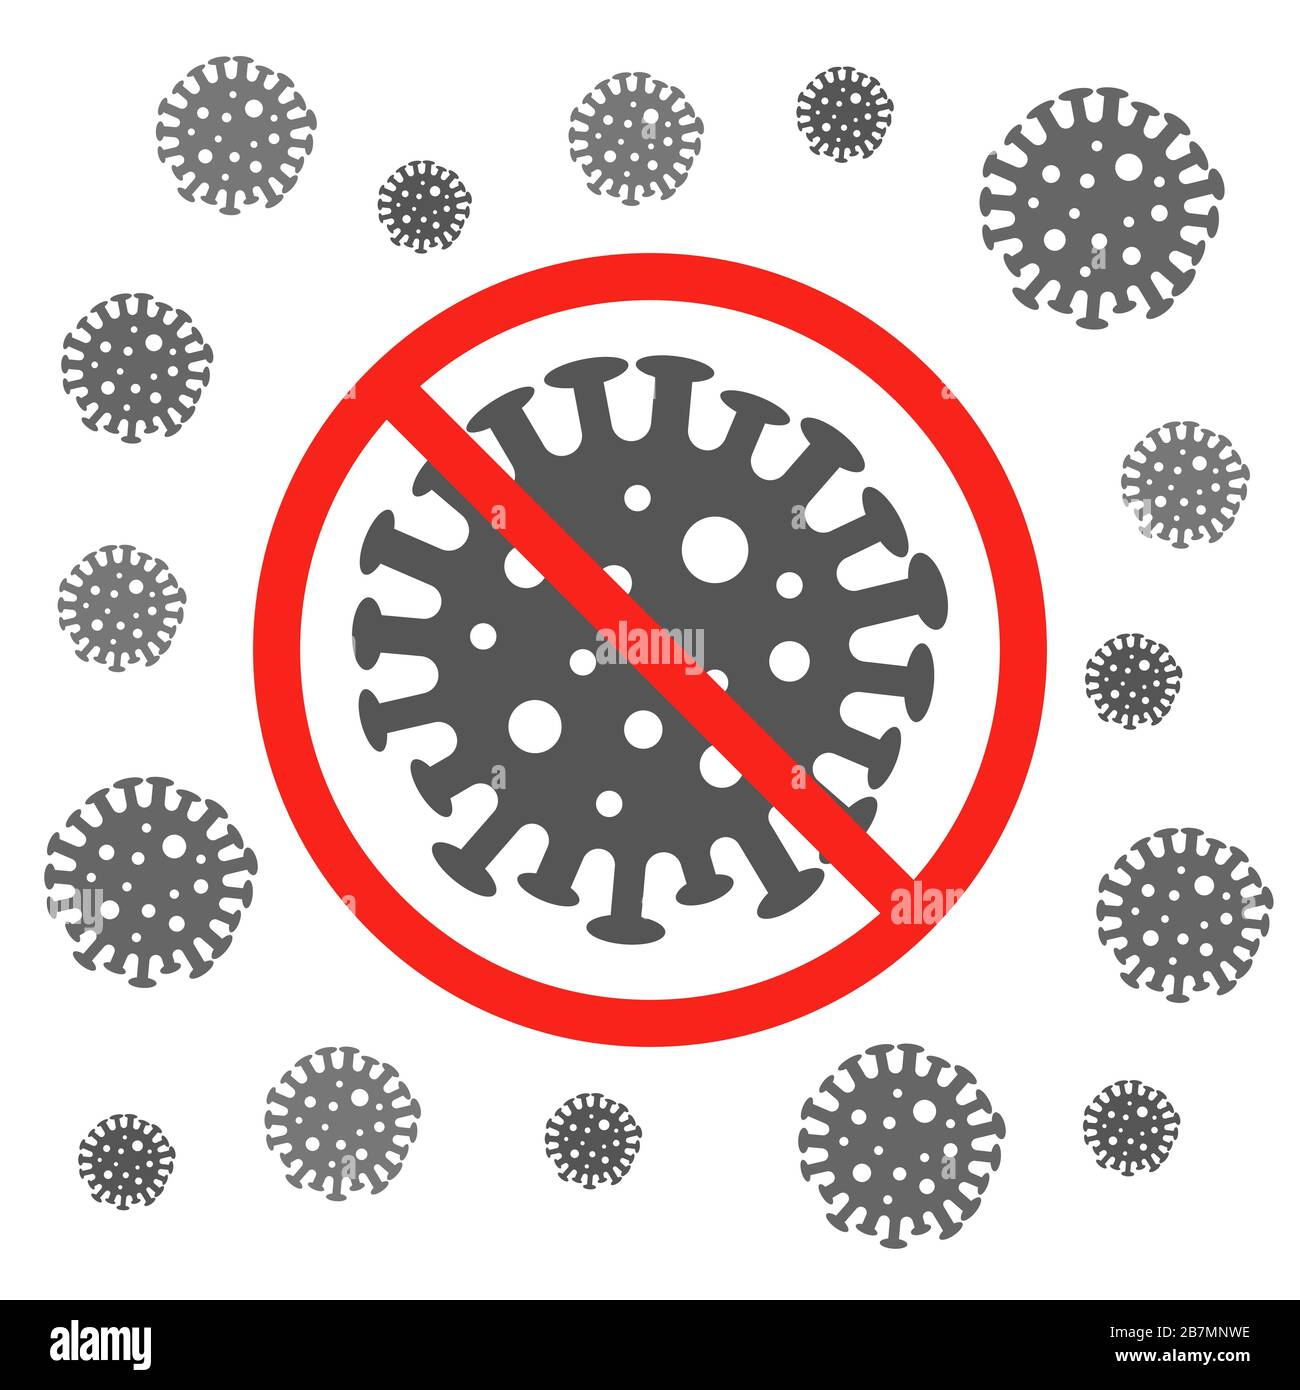 Sign caution coronavirus. Stop coronavirus. Coronavirus danger and public health risk disease and flu outbreak. Pandemic medical concept with Stock Vector